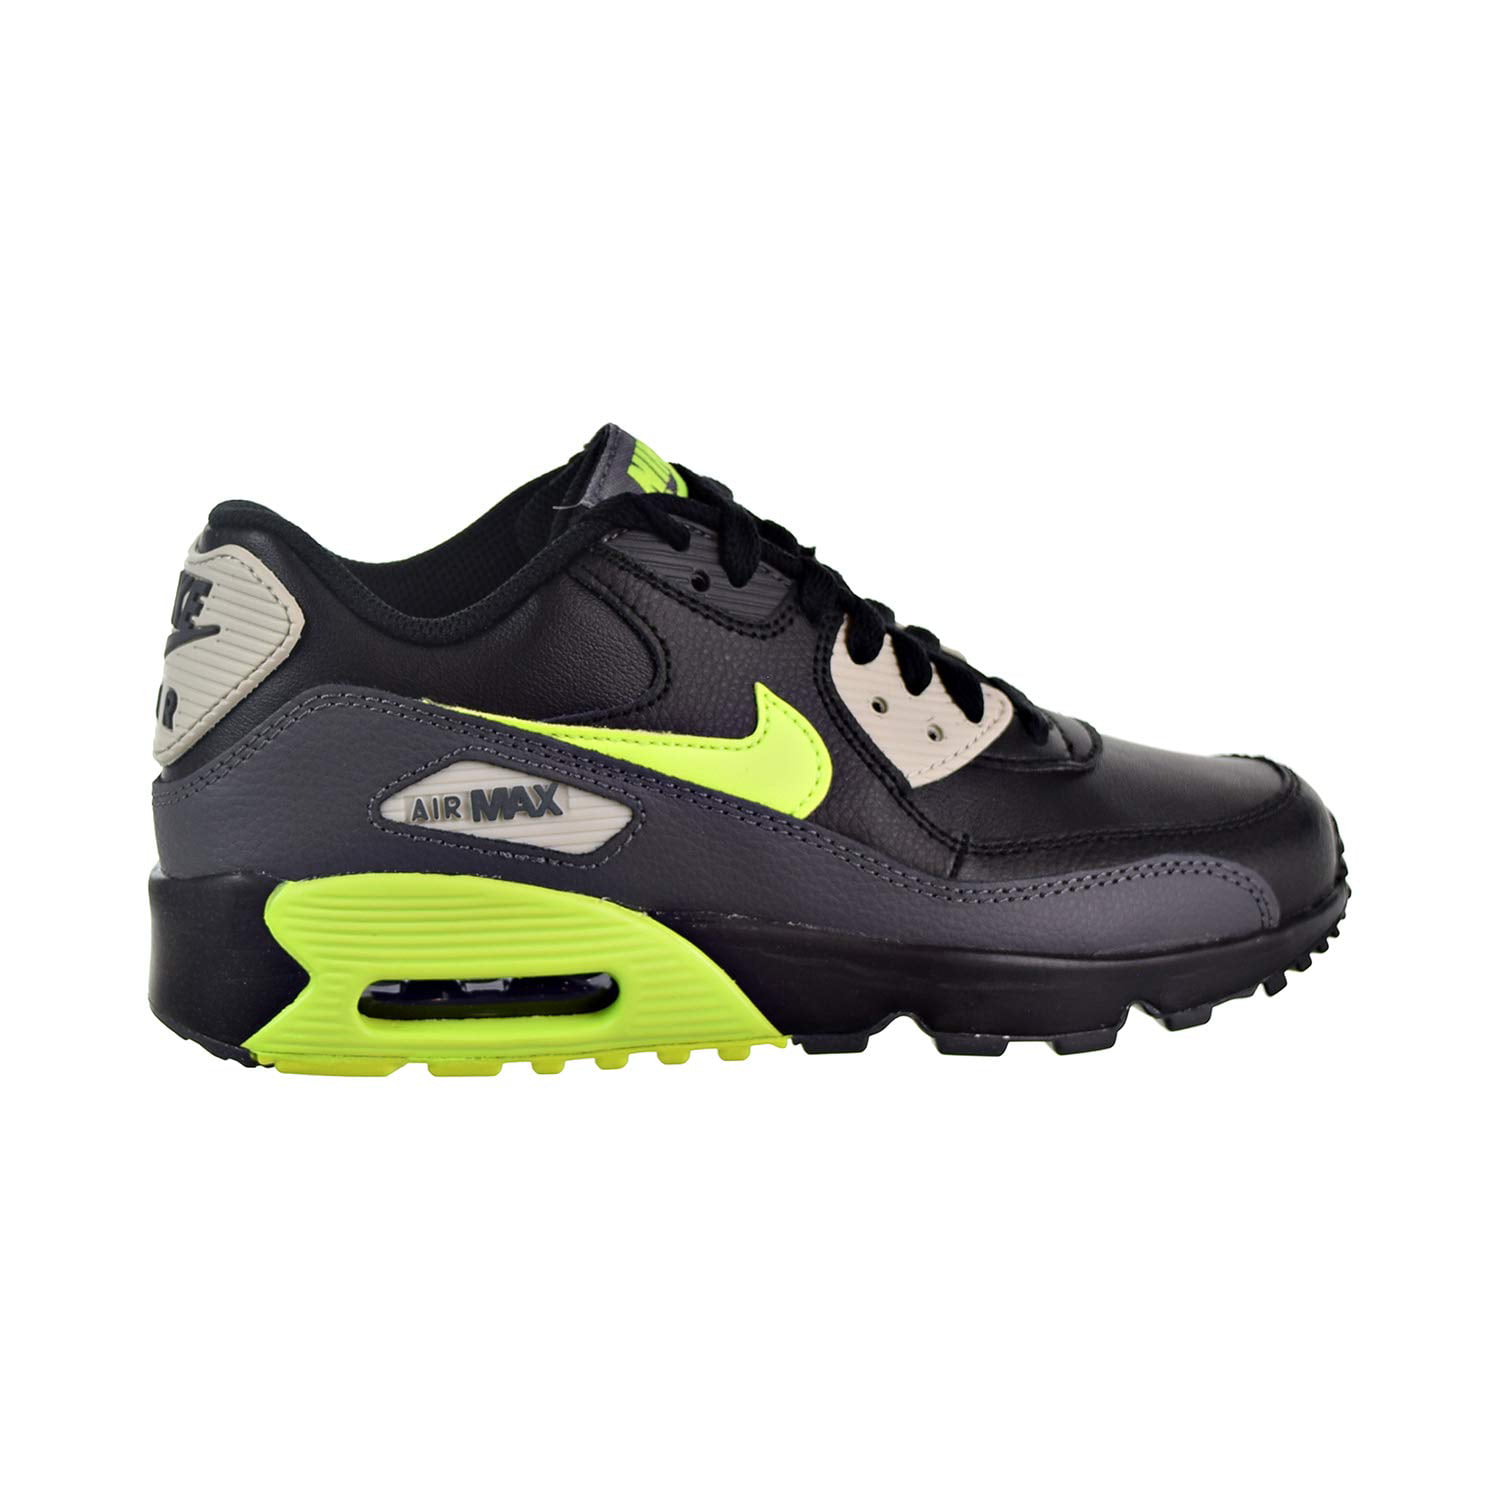 Nike - Nike 833412-023: Big Kids' Air Max 90 Leather Shoes Dark Grey/Volt Black Sneaker (6 M US Big Kid) - Walmart.com